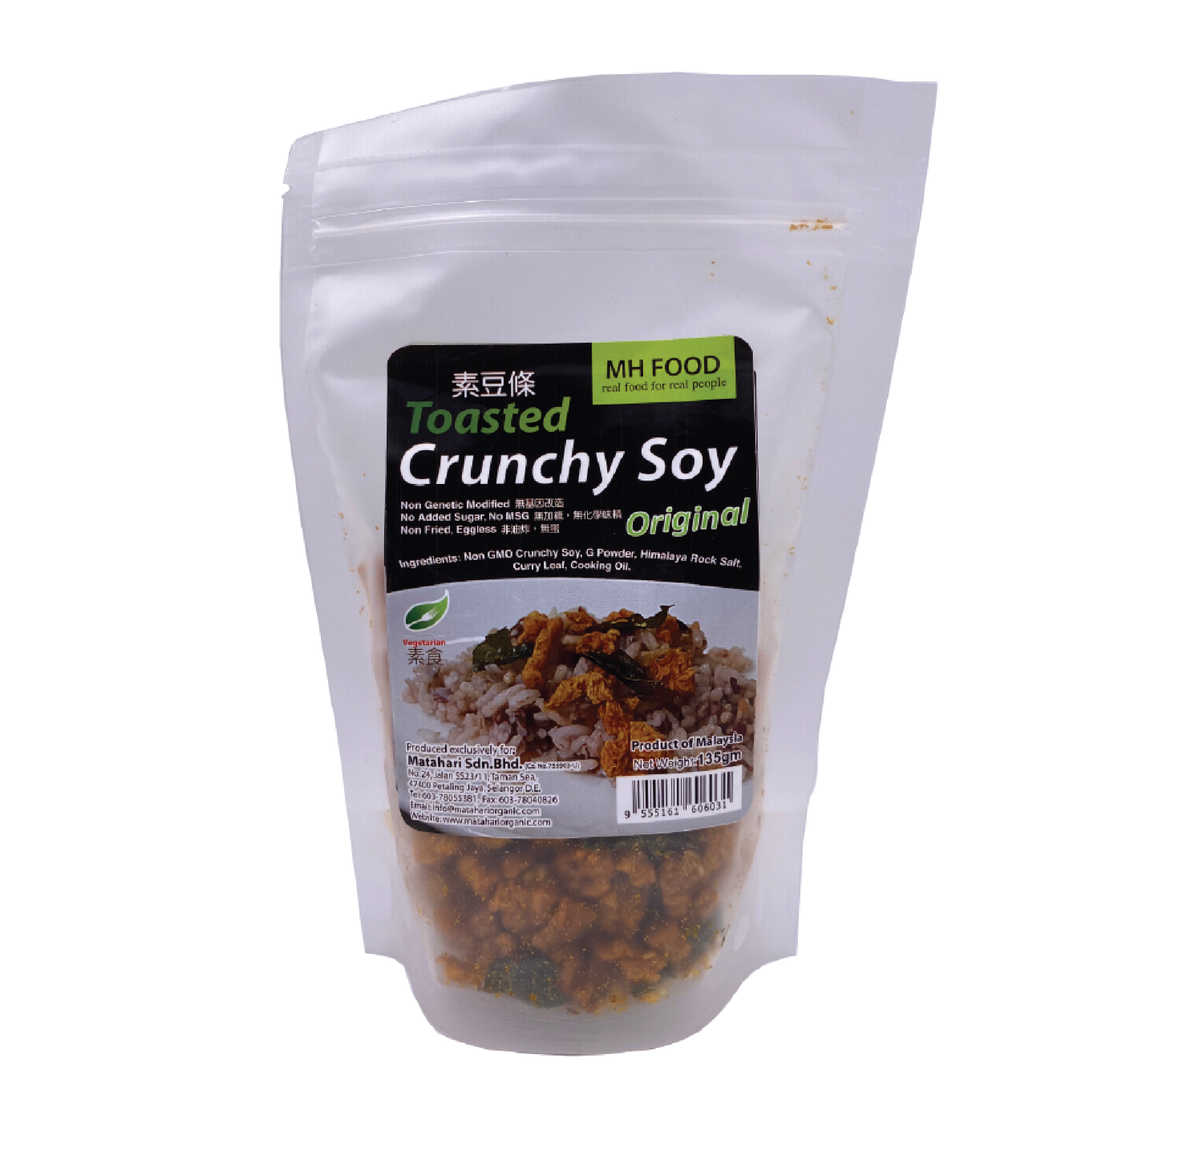 Toasted Crunch Soy - Original (135GM)